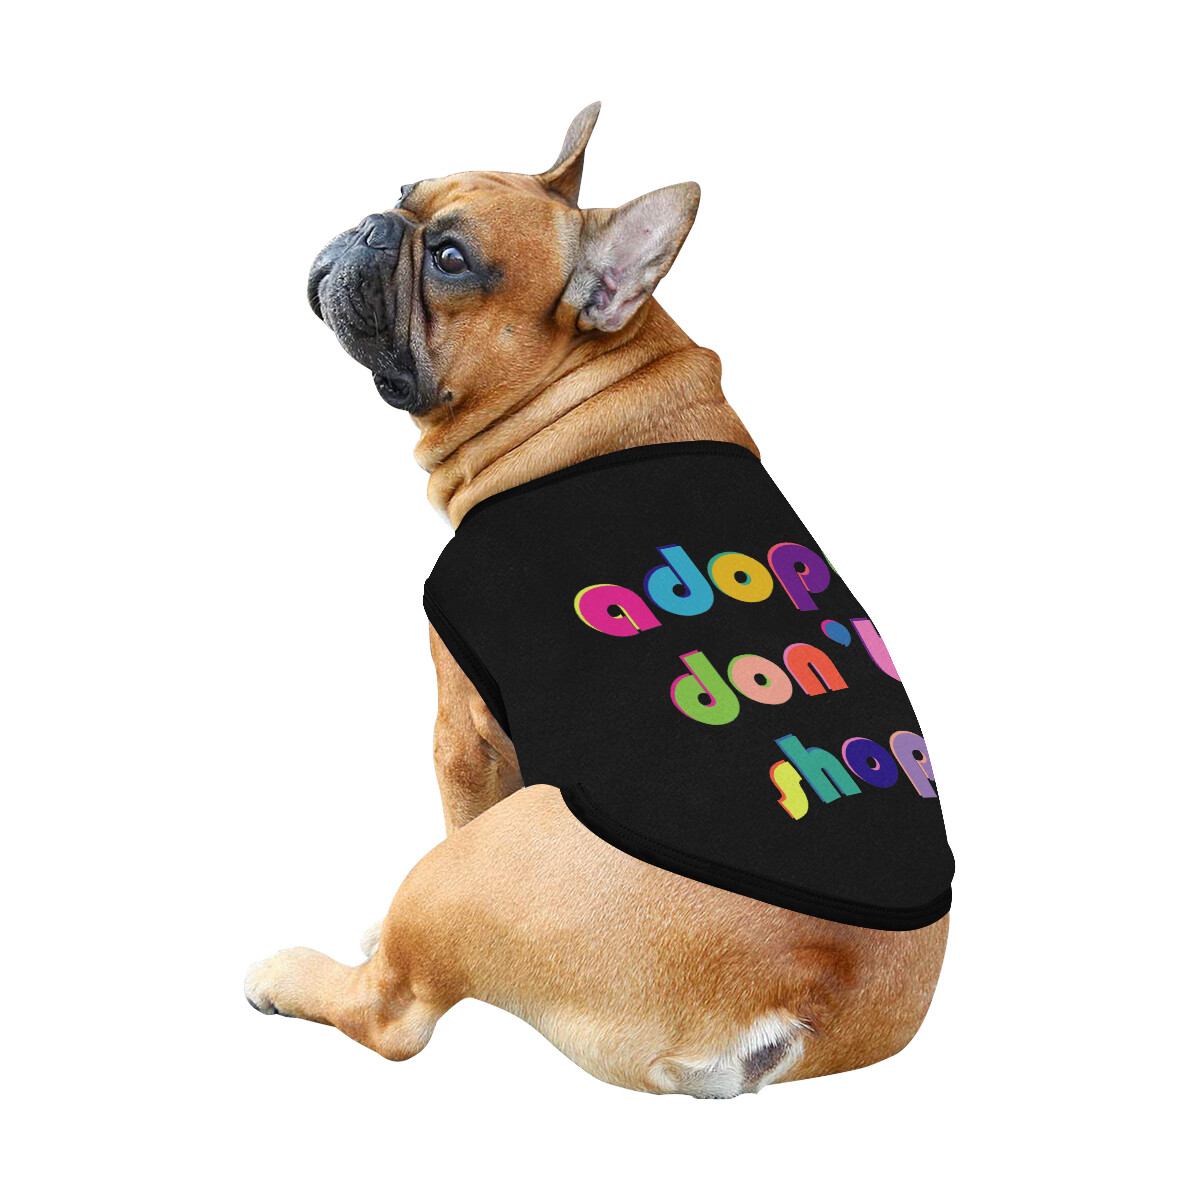 🐕 Adopt don't shop Dog shirt, Dog Tank Top, Dog t-shirt, Dog clothes, Gifts, front back print, 7 sizes XS to 3XL, dog gifts, black